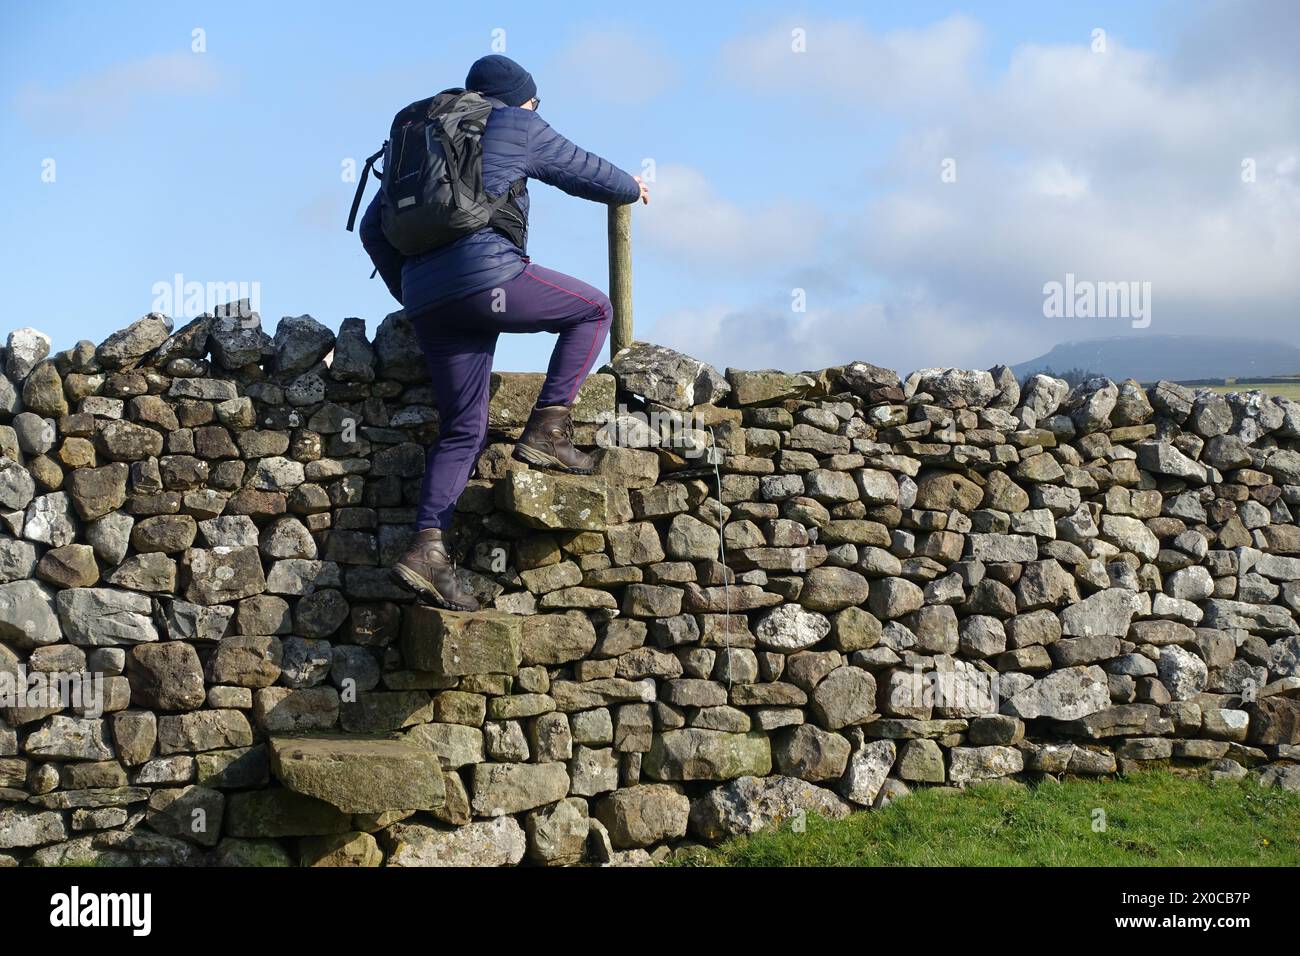 Man (Wanderer) klettert auf Stone Steps on a Stile in Dry Stone Wall bei Slatenber bei Ingleton, im Yorkshire Dales National Park, England, Großbritannien. Stockfoto